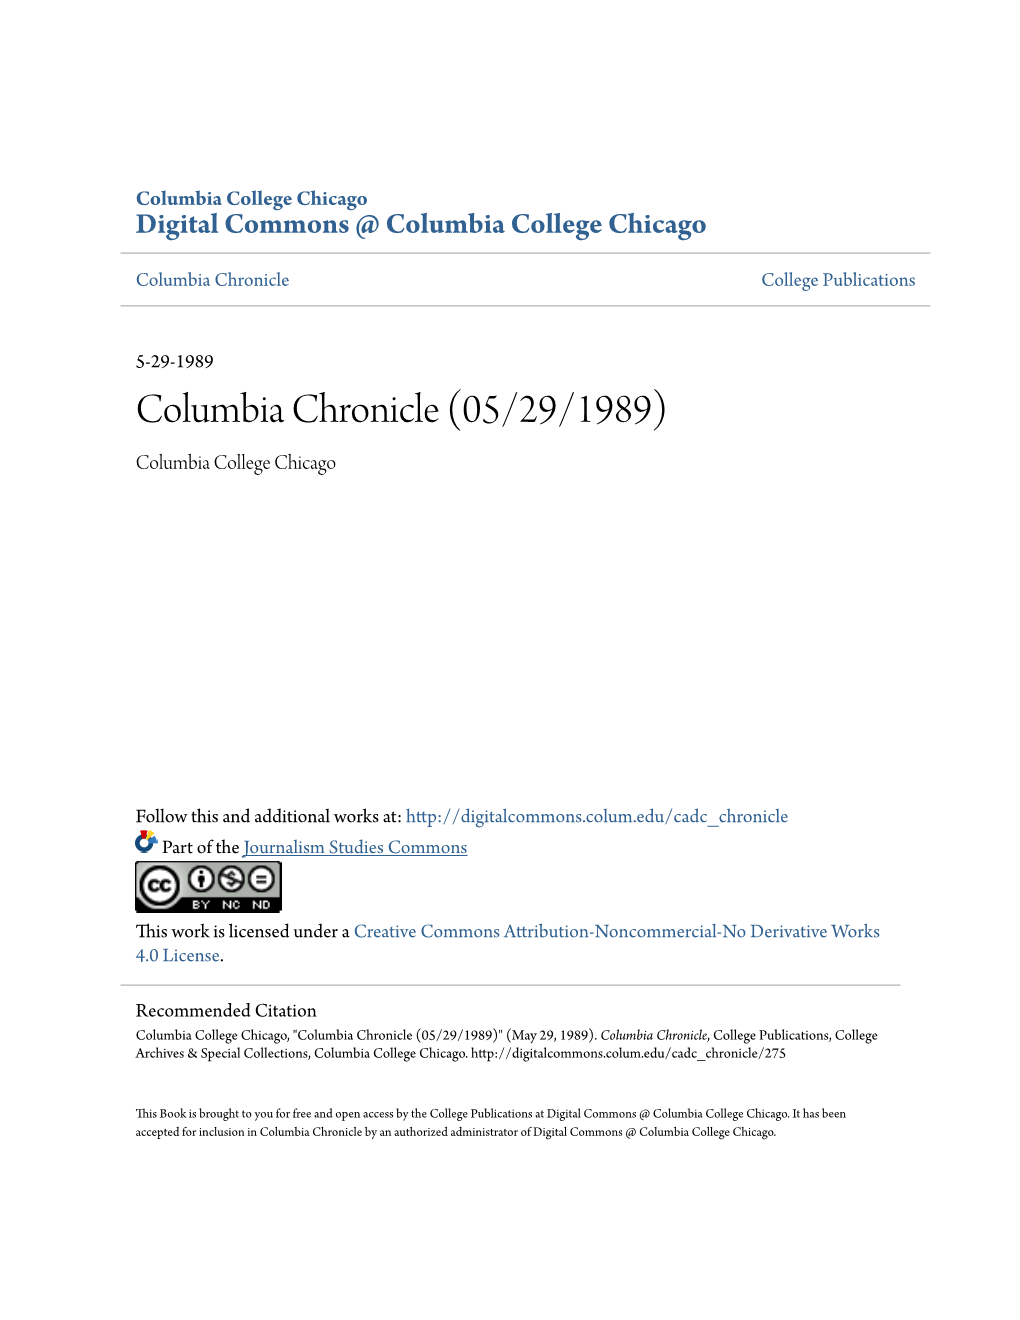 Columbia Chronicle (05/29/1989) Columbia College Chicago